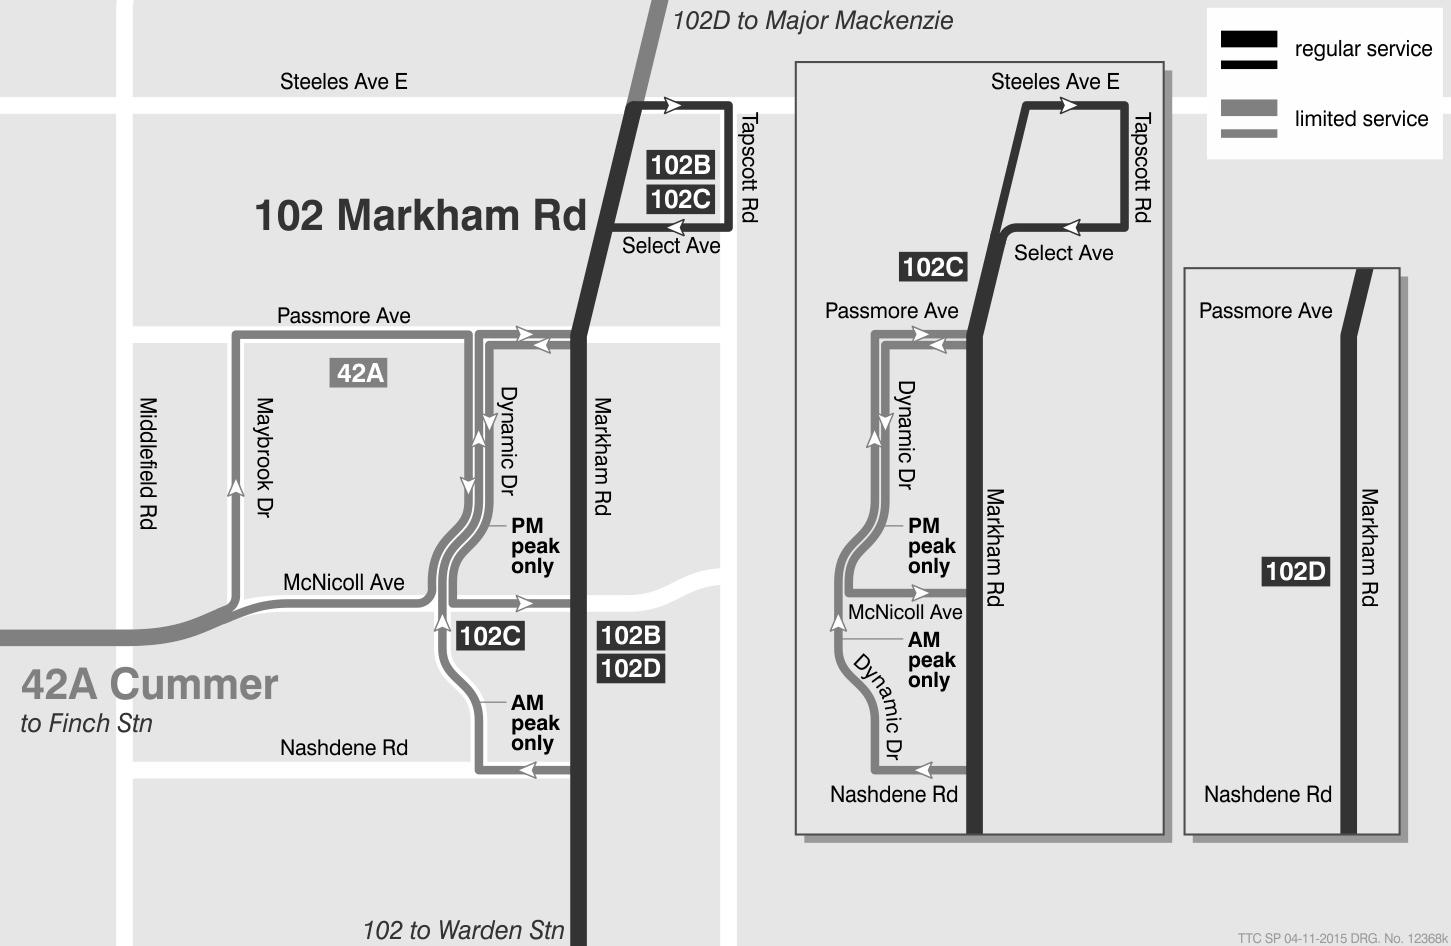 TTC 0000 102 Markham Road 42 Cummer Route Change 20160103